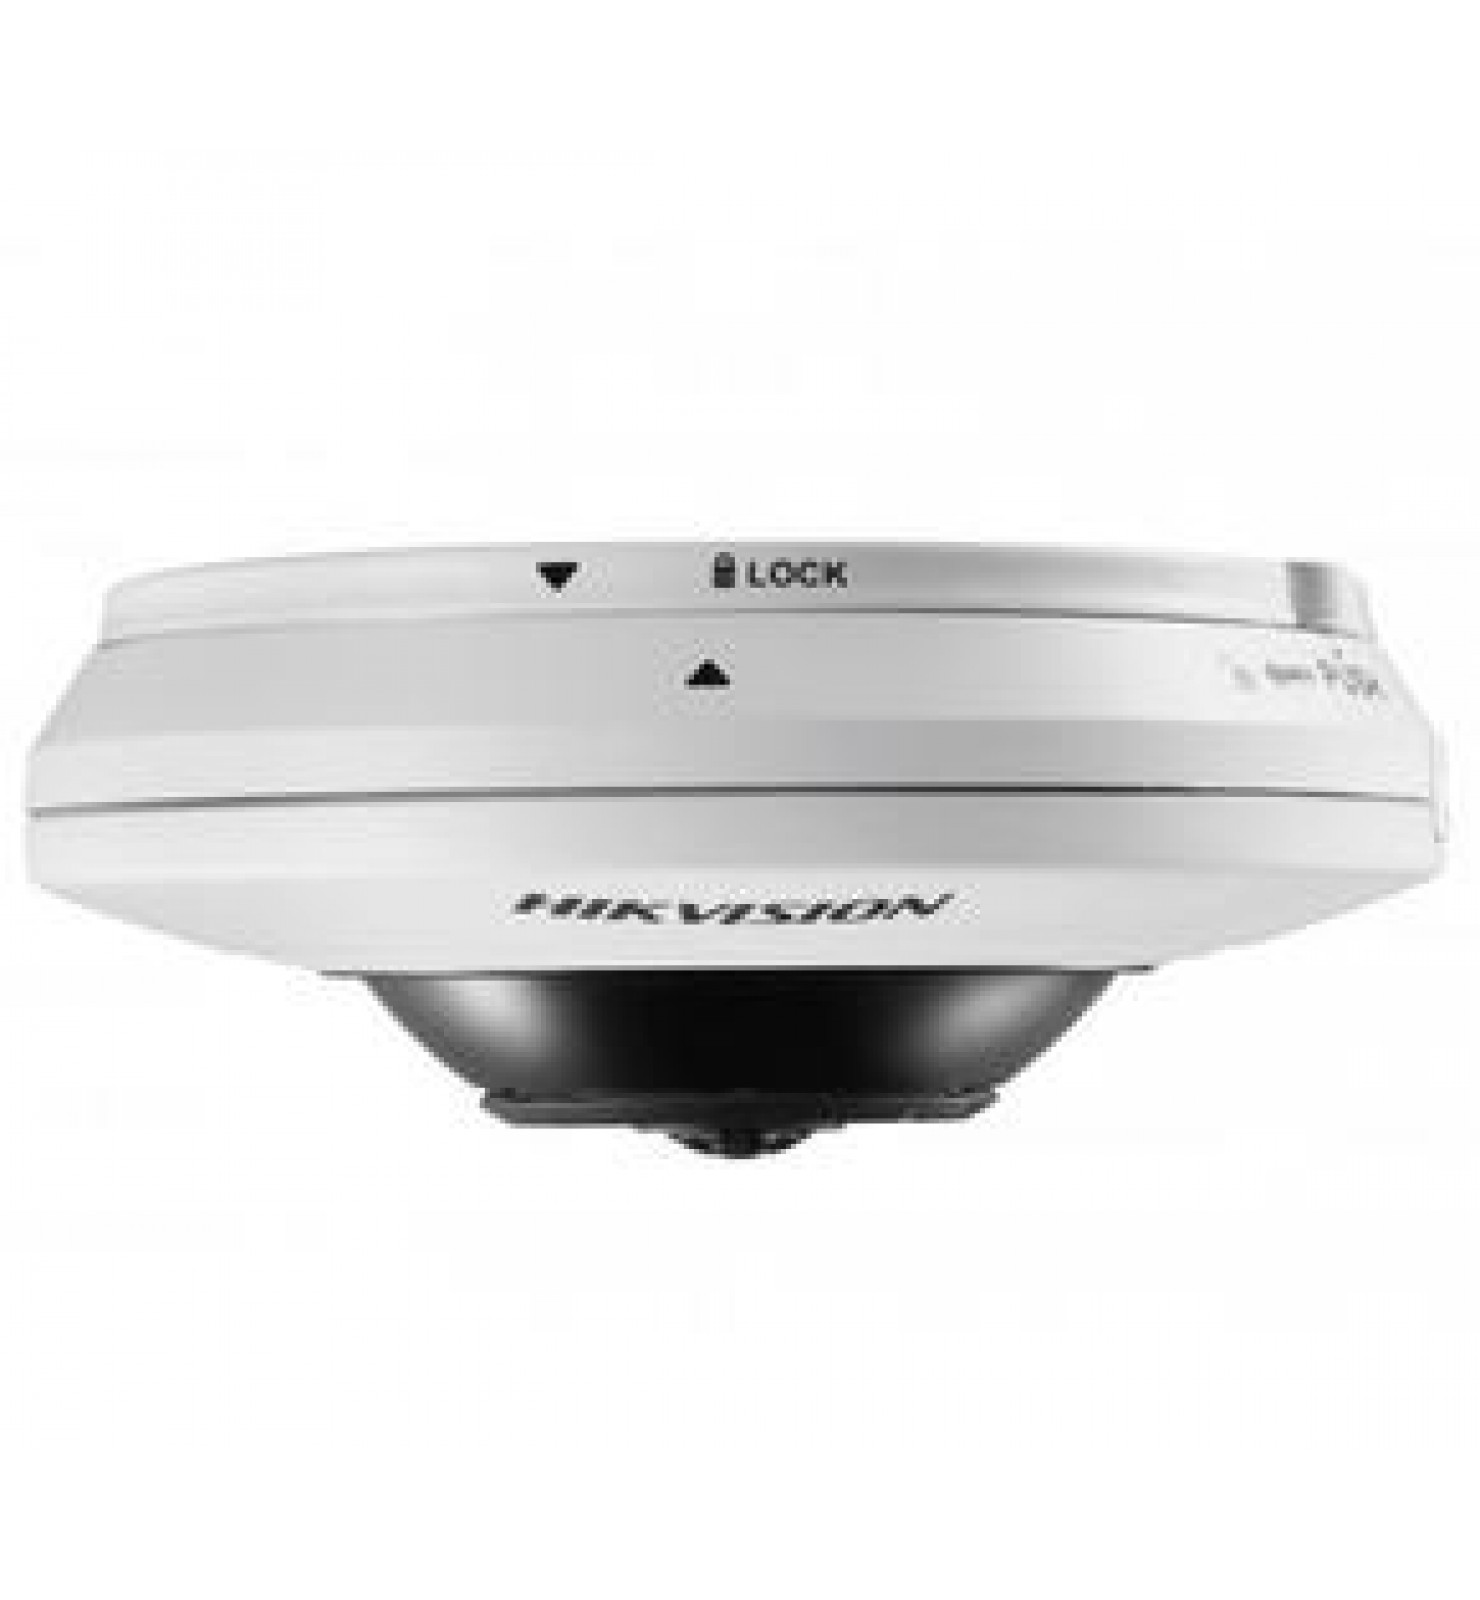 Камера Hikvision DS-2CD2935FWD-I с fisheye-объективом, EXIR-подсветкой 8 м